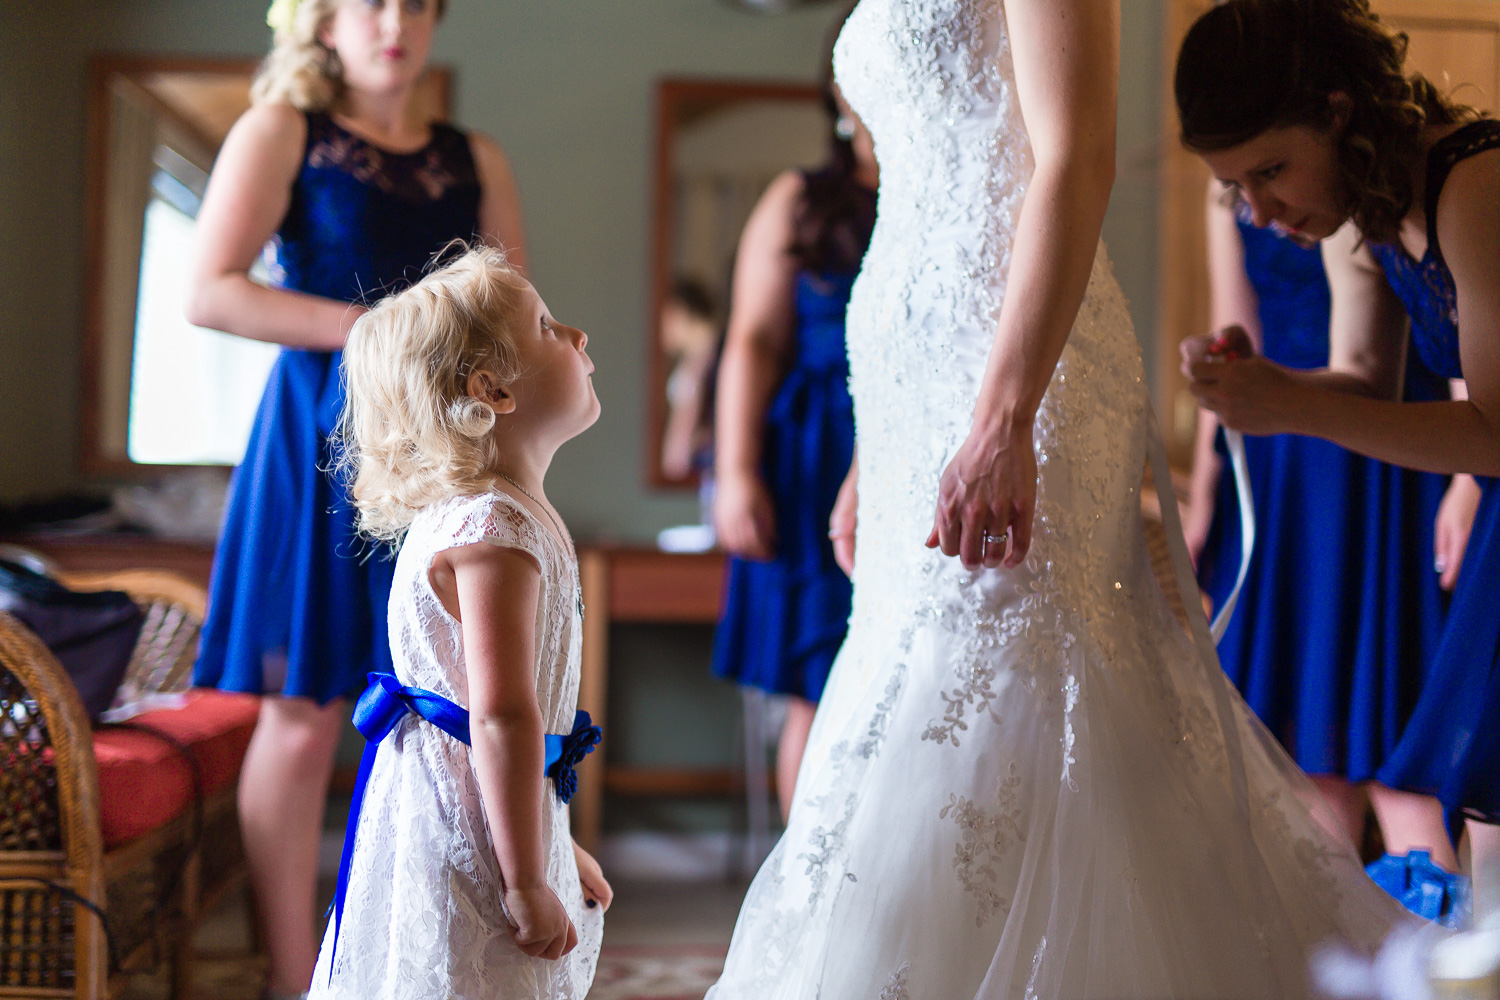 Flower girl looks up at bride in wedding dress